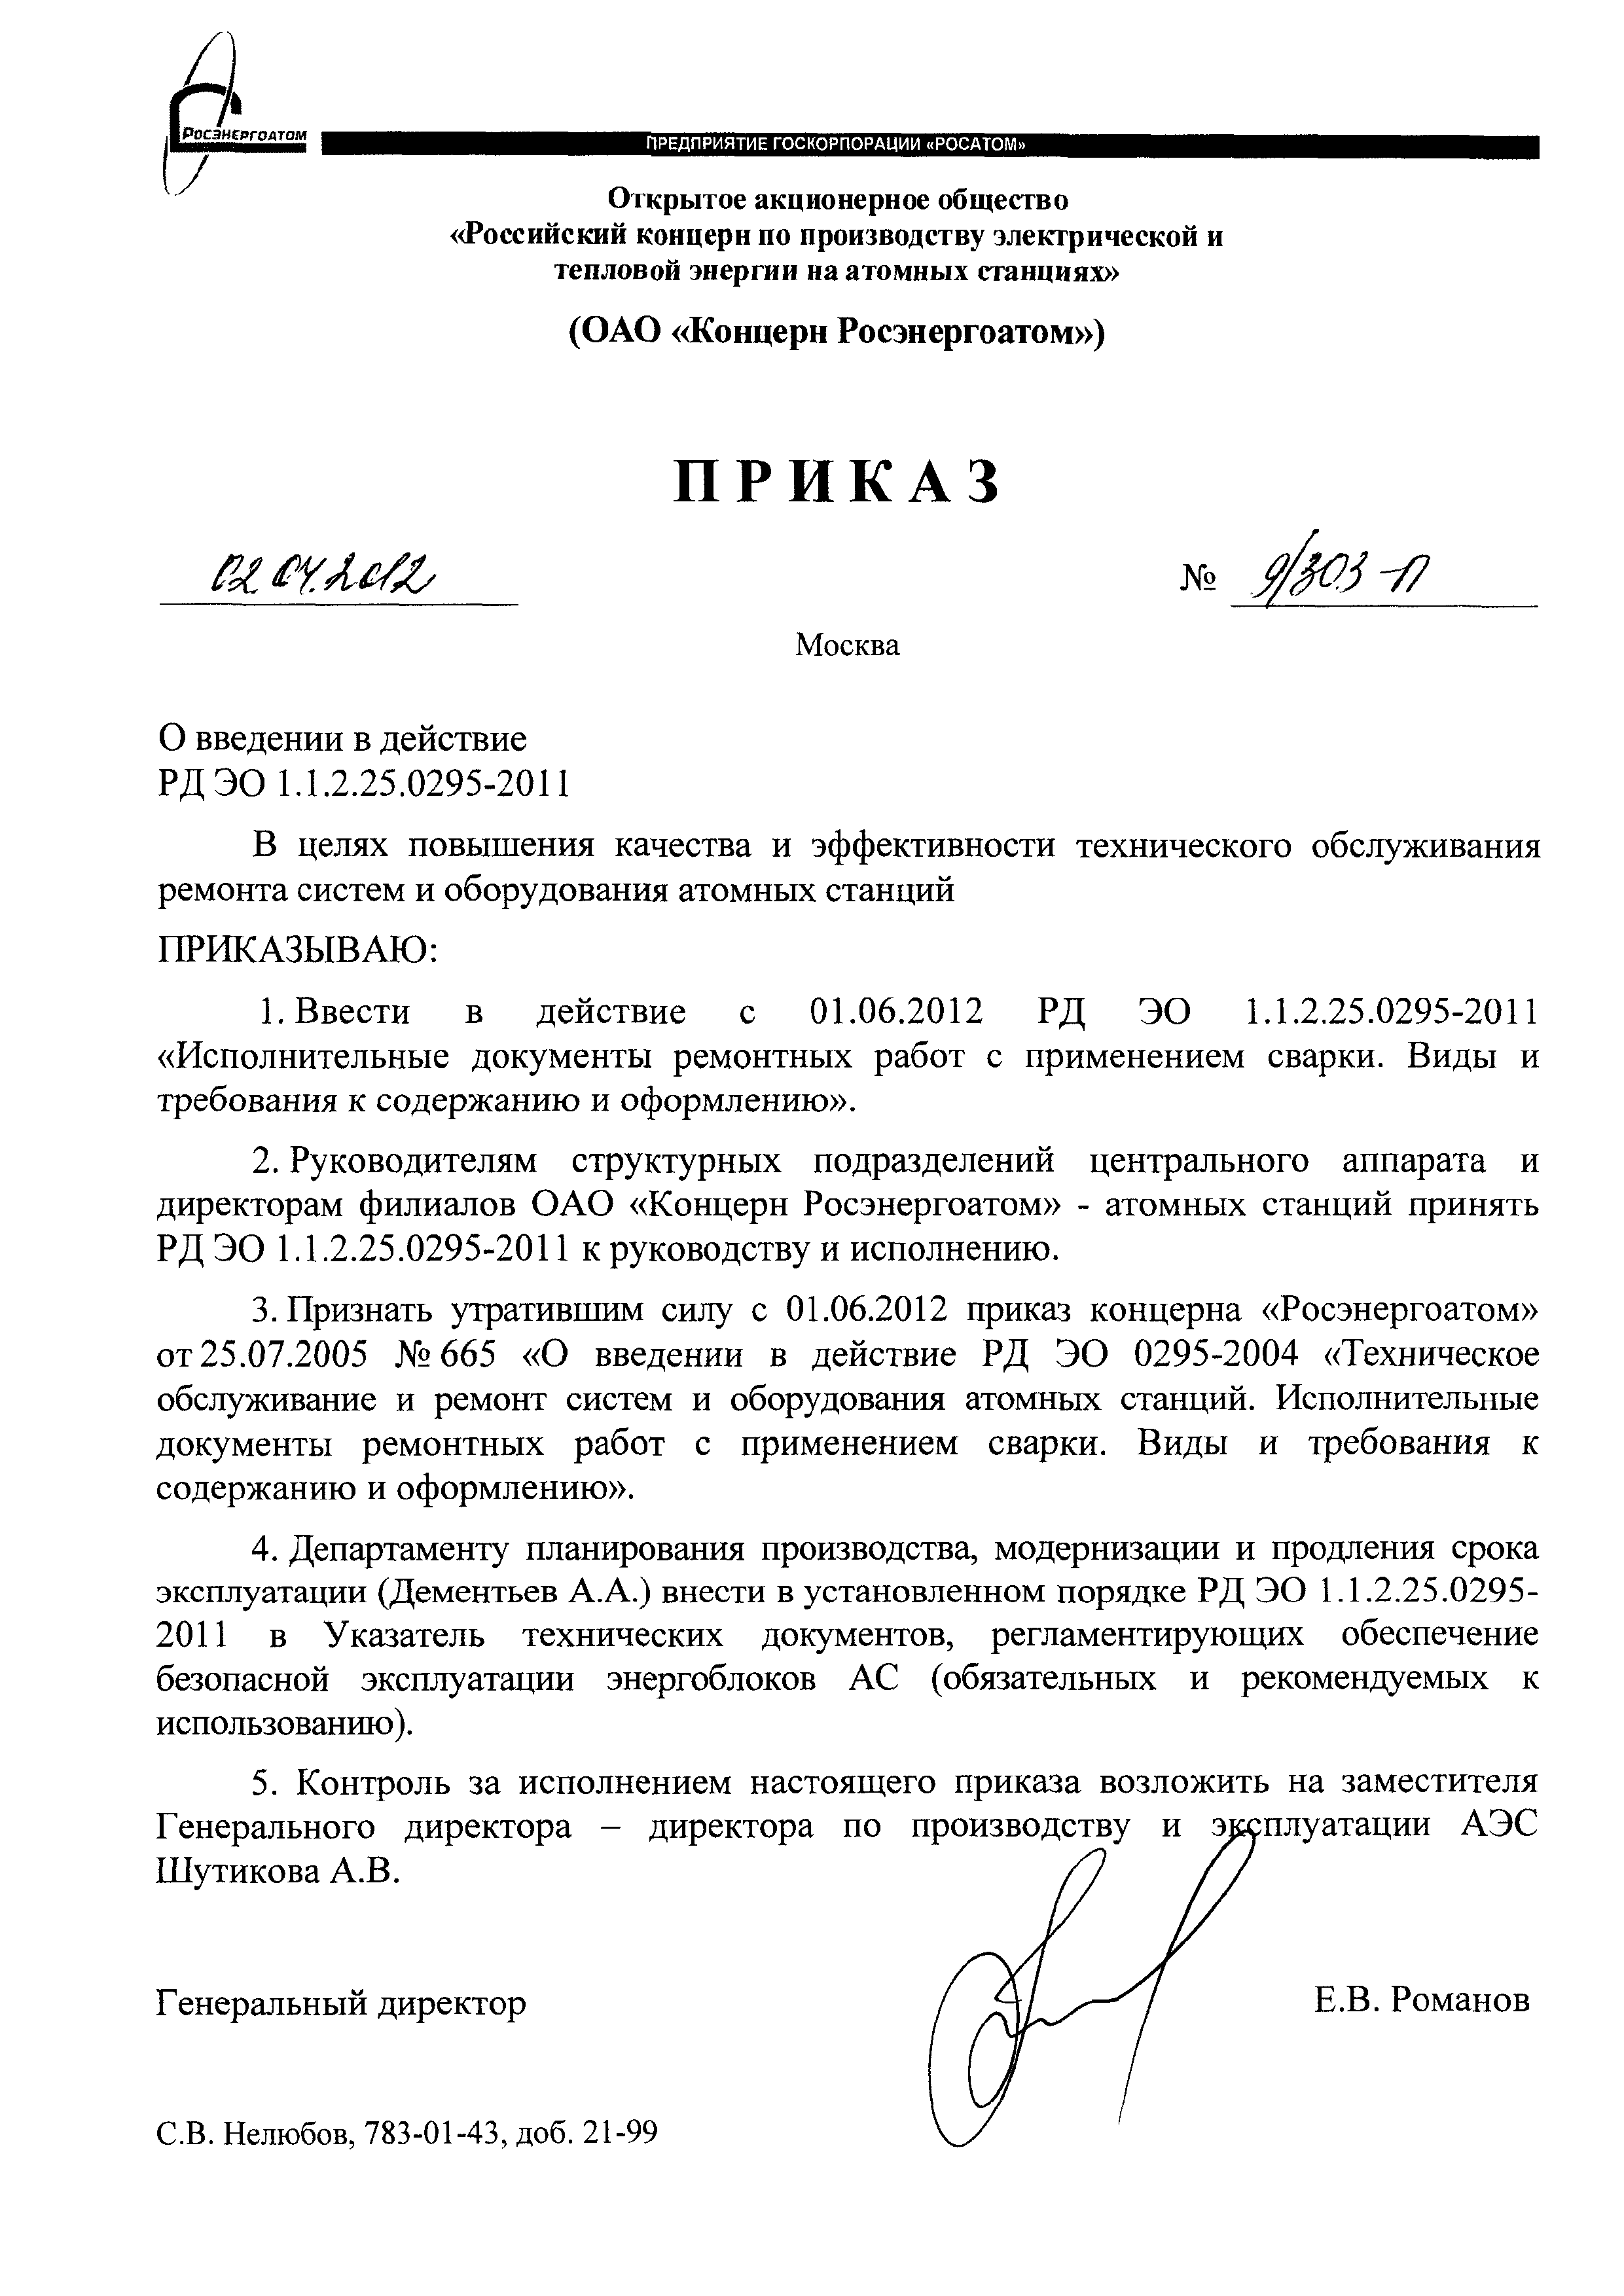 РД ЭО 1.1.2.25.0295-2011